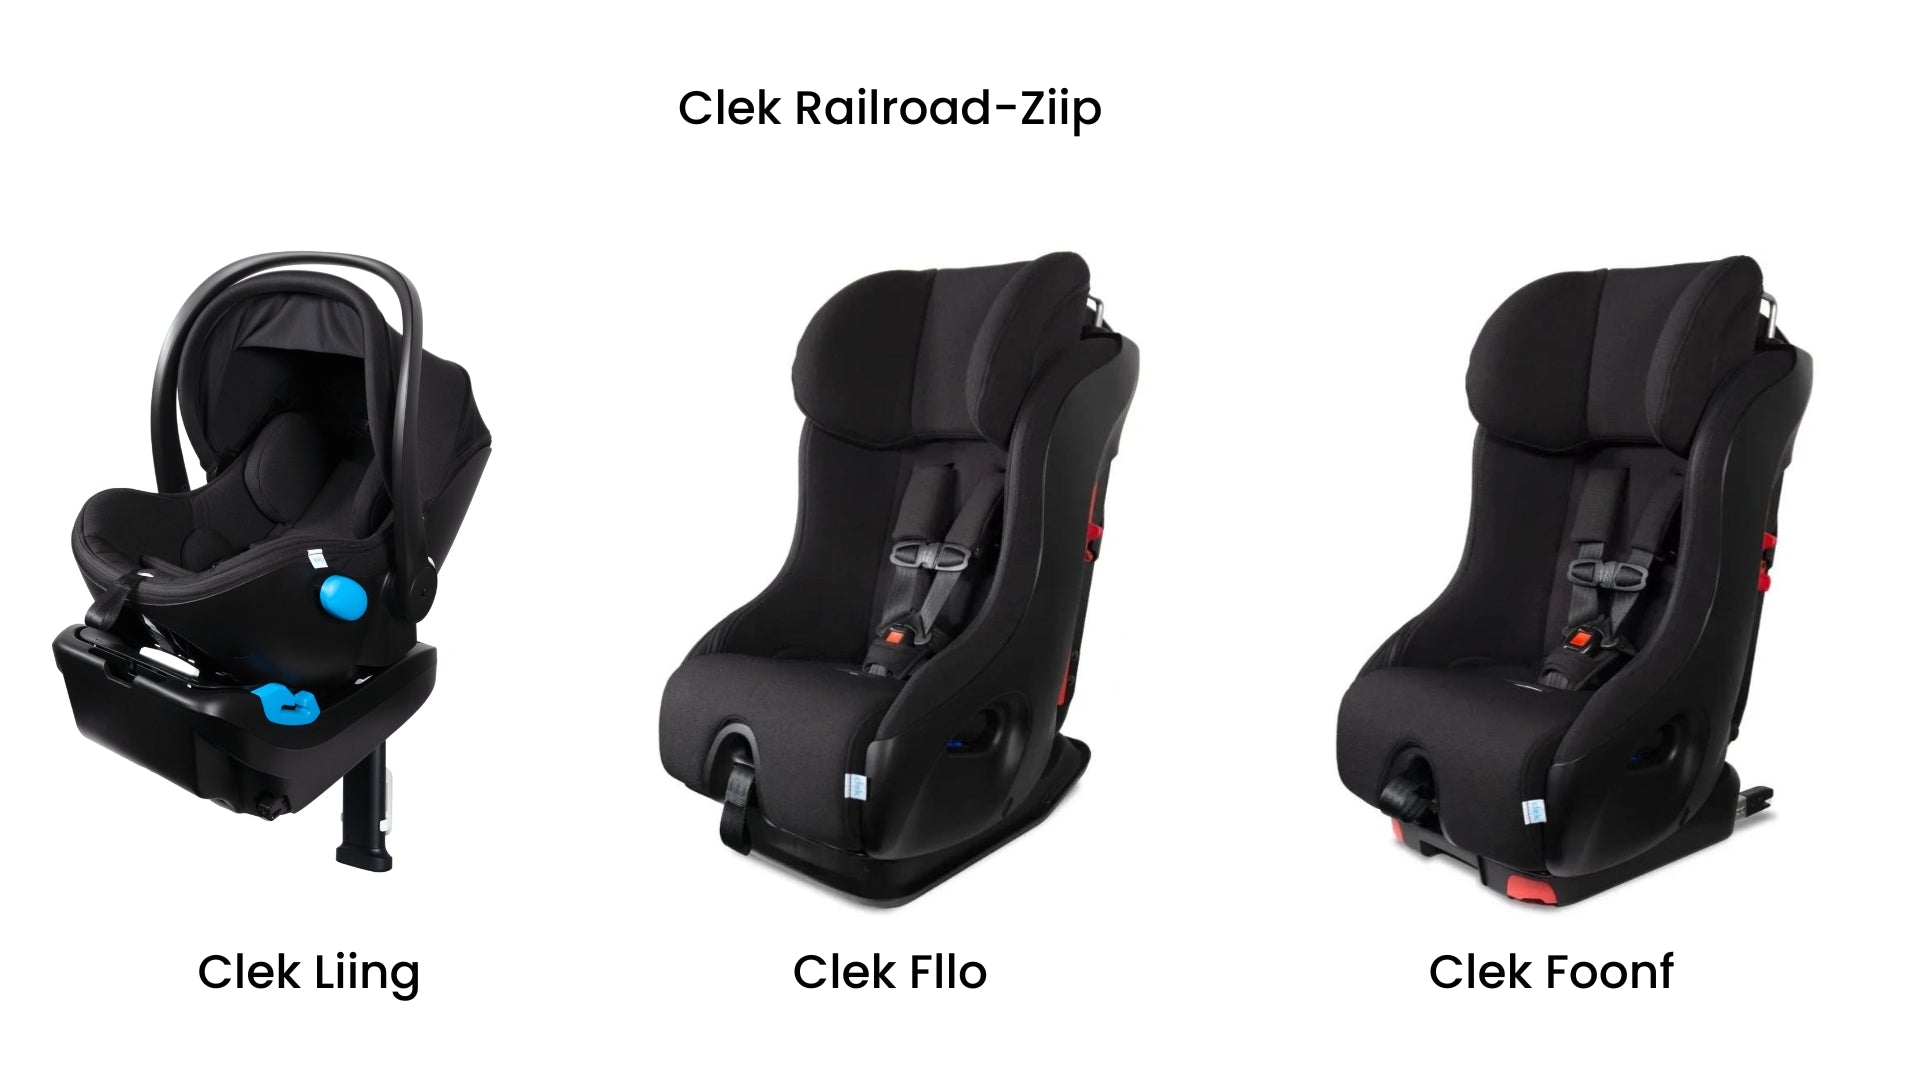 Clek Railroad-Ziip Models